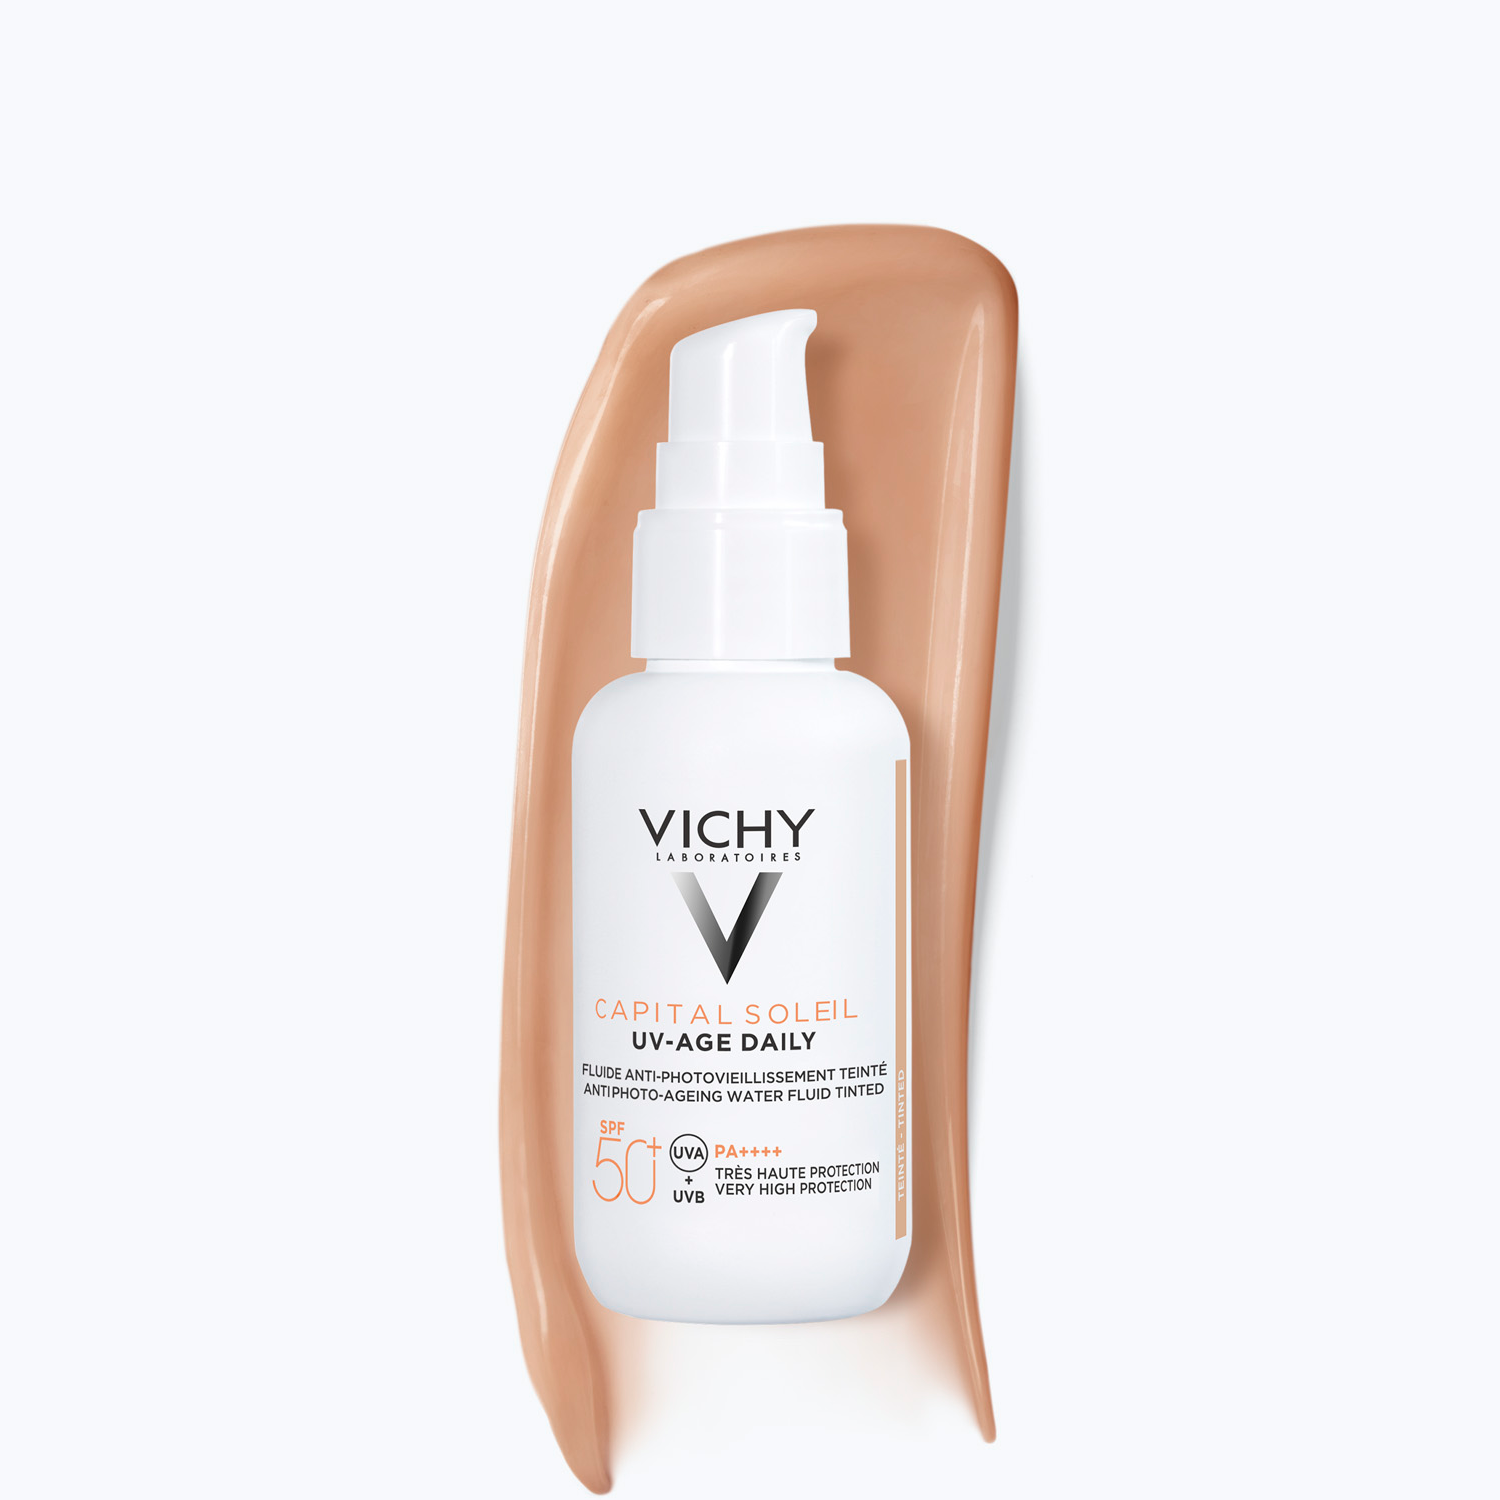 Vichy spf 50 для лица флюид. Vichy солнцезащитный флюид spf50+. Vichy Capital Soleil UV-age Daily spf50+. Виши флюид солнцезащитный 50+. Виши невесомый солнцезащитный флюид.